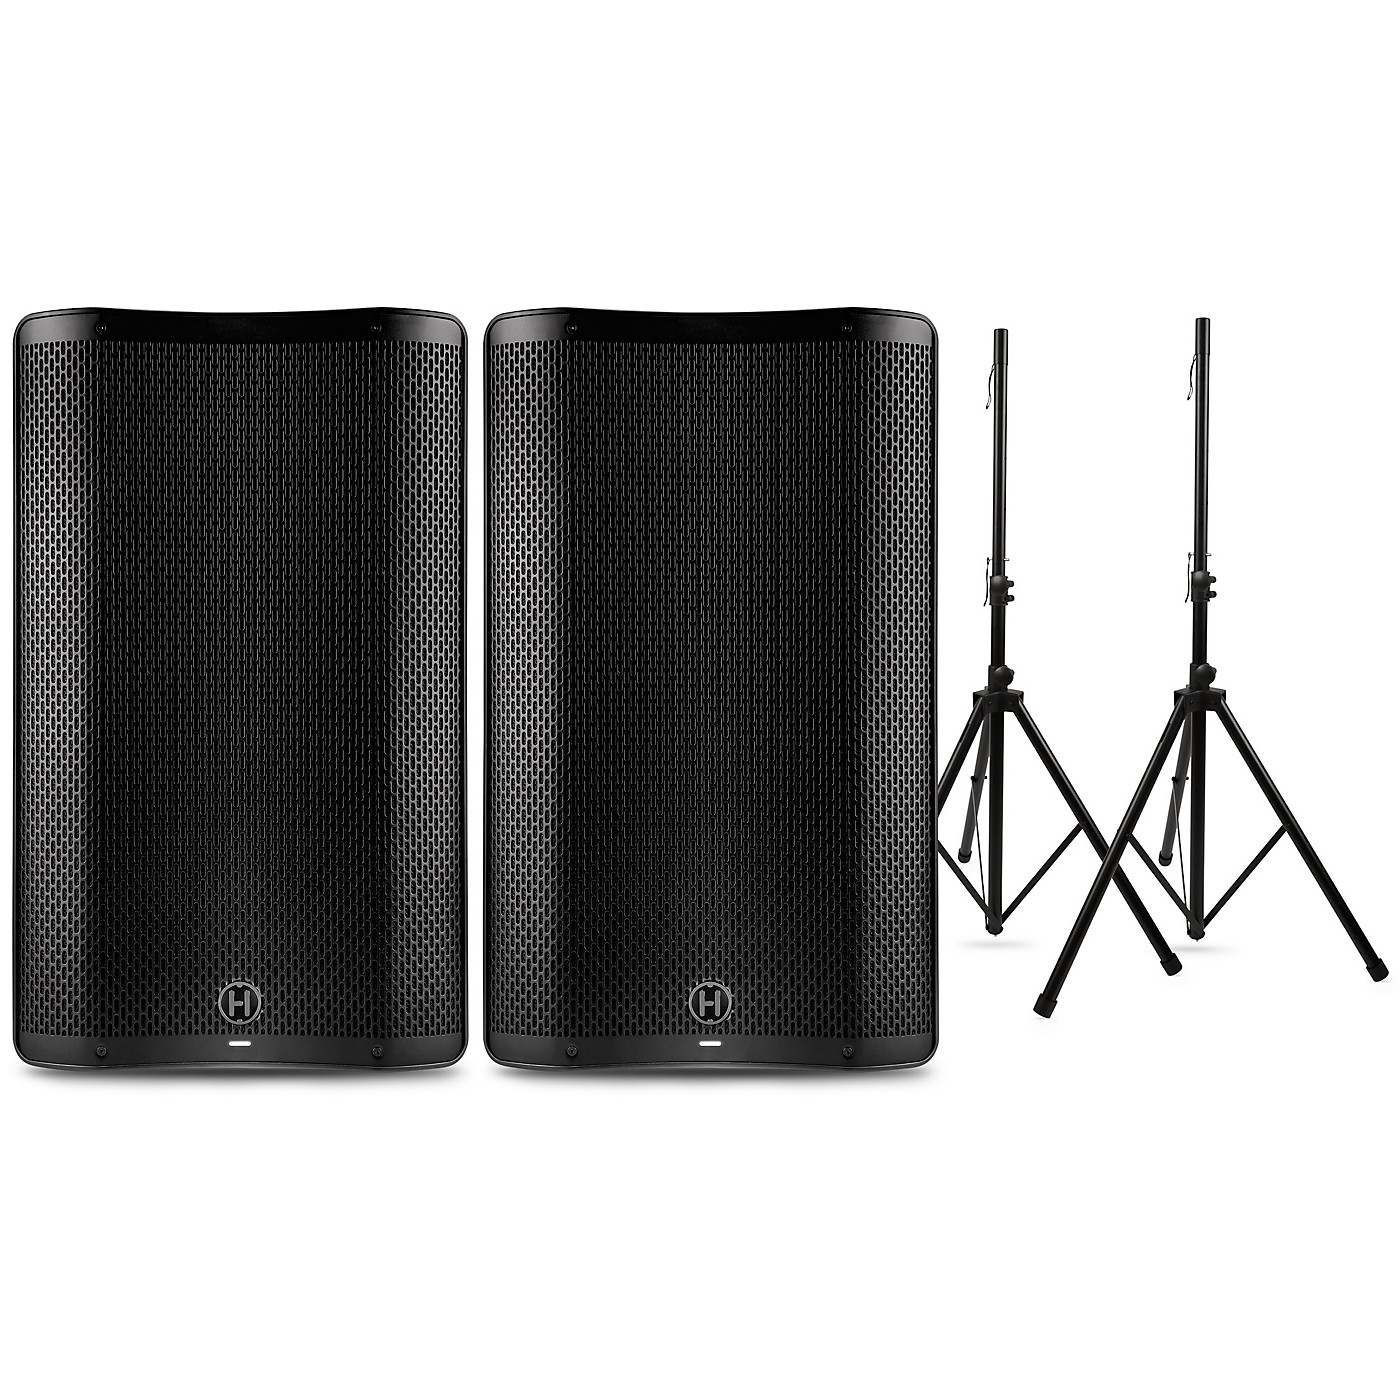 Harbinger VARI 4000 Series Powered Speakers Package With Stands thumbnail